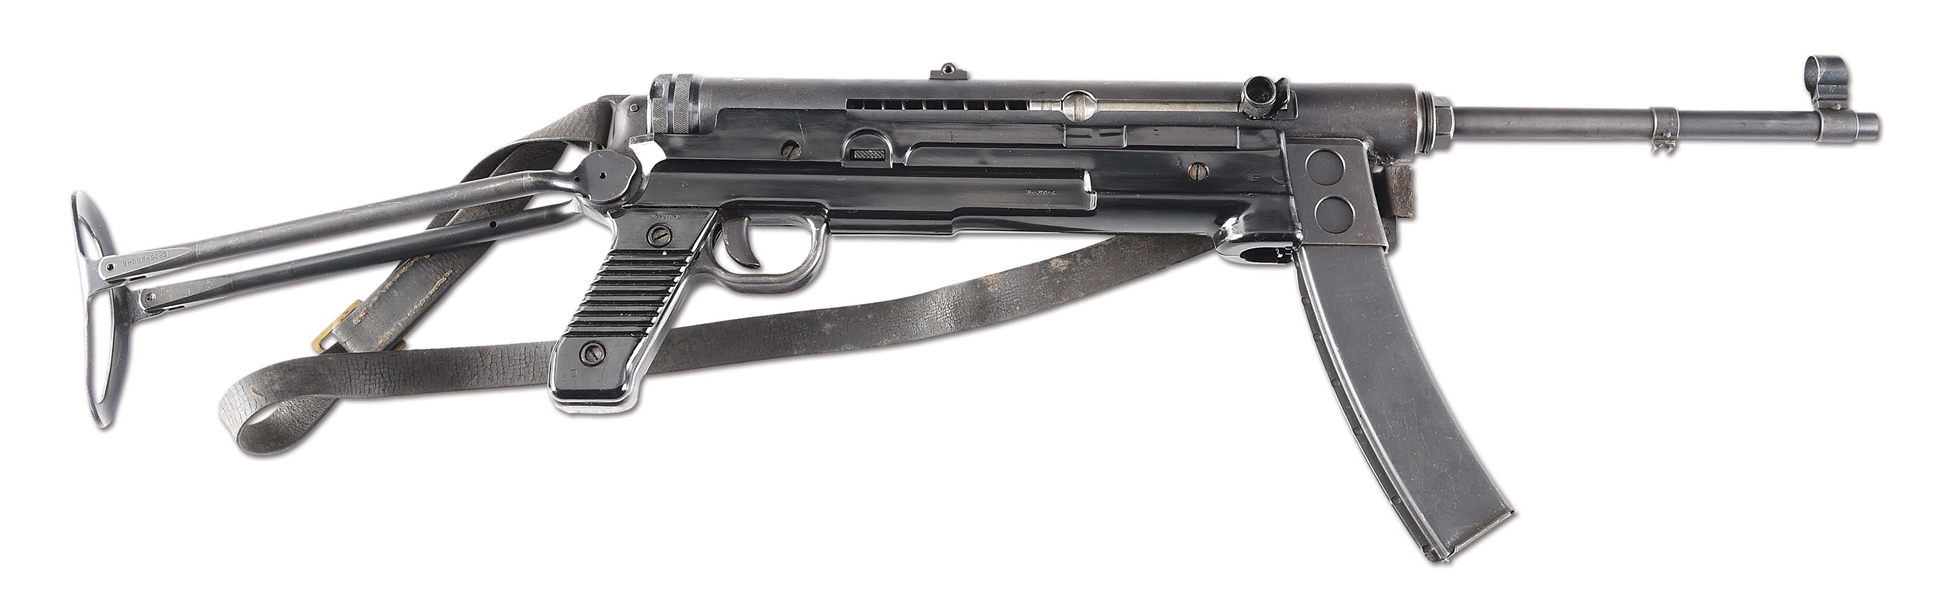 (N) FLEMING FIREARMS YUGOSLAVIAN M56 SUBMACHINE GUN (FULLY TRANSFERABLE).